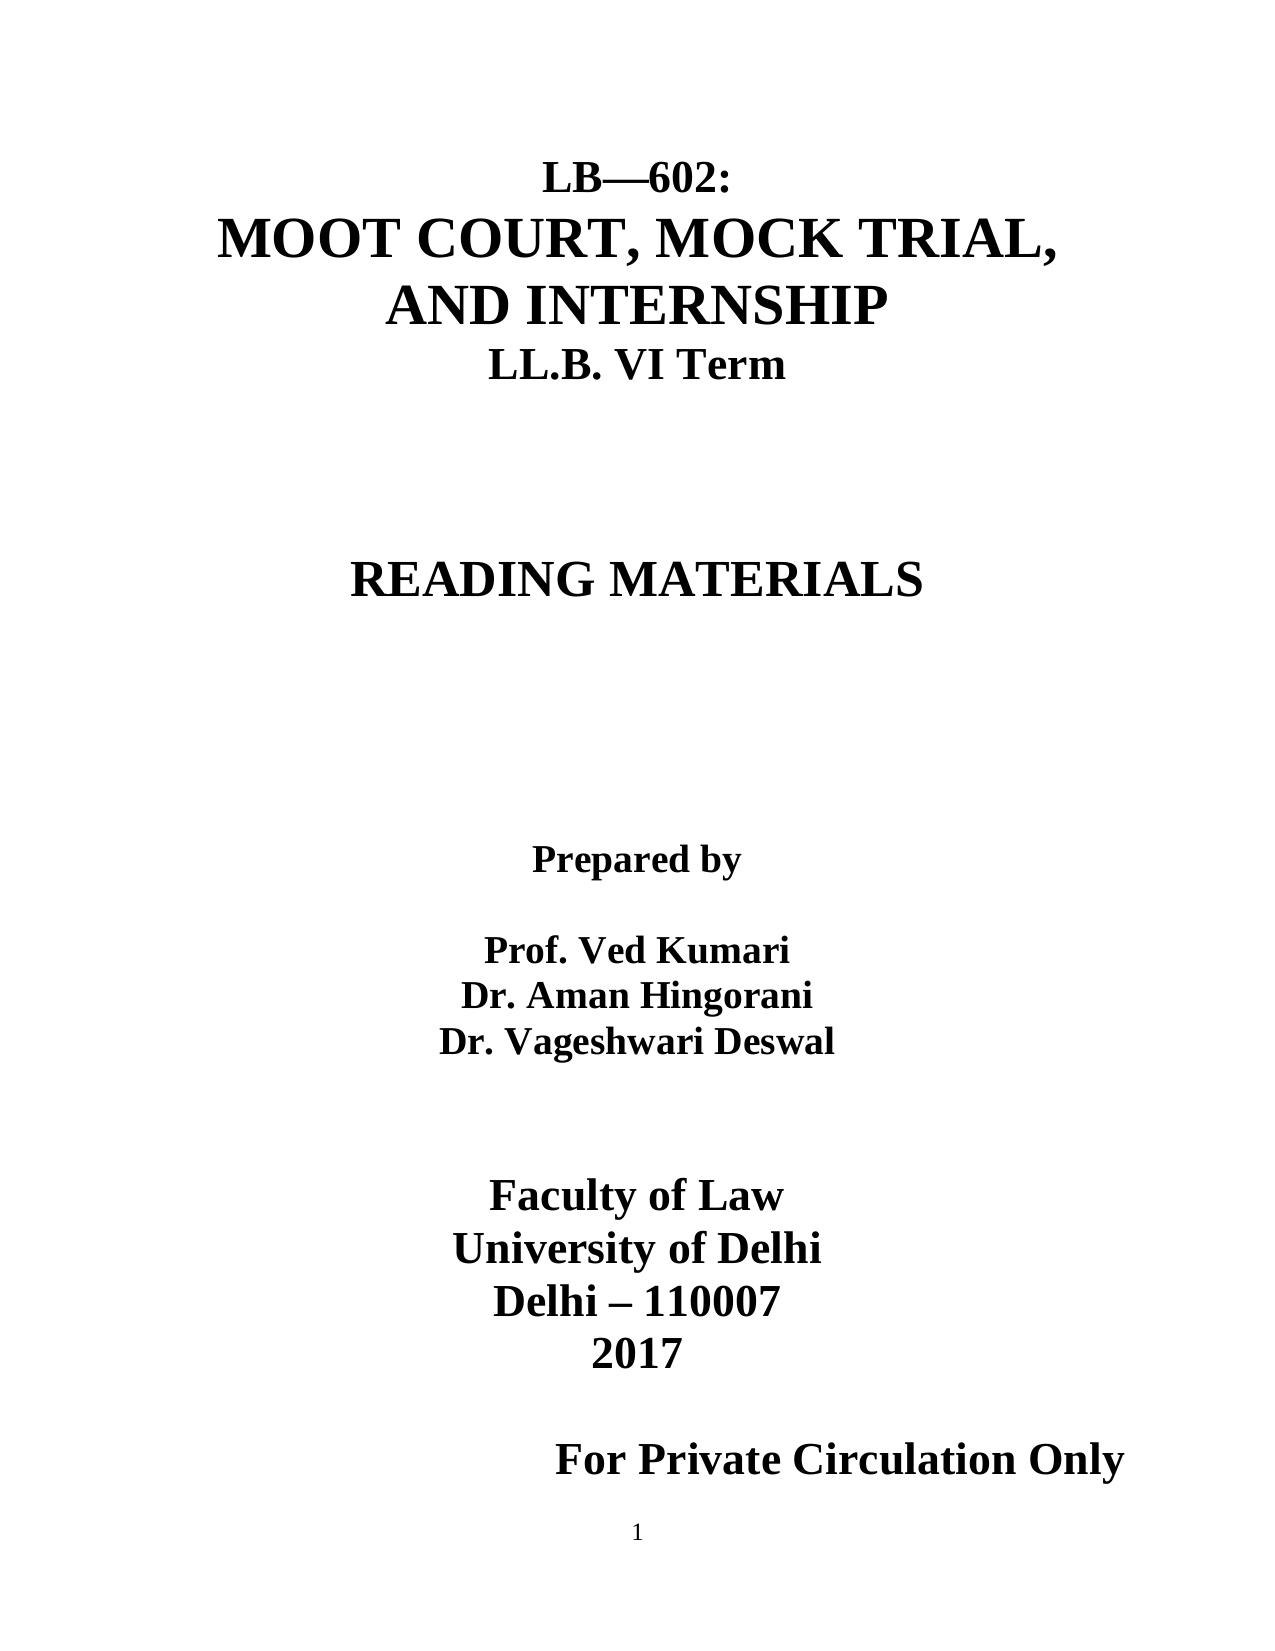 LB-602 Moot Court Mock Trial and Internship 2017